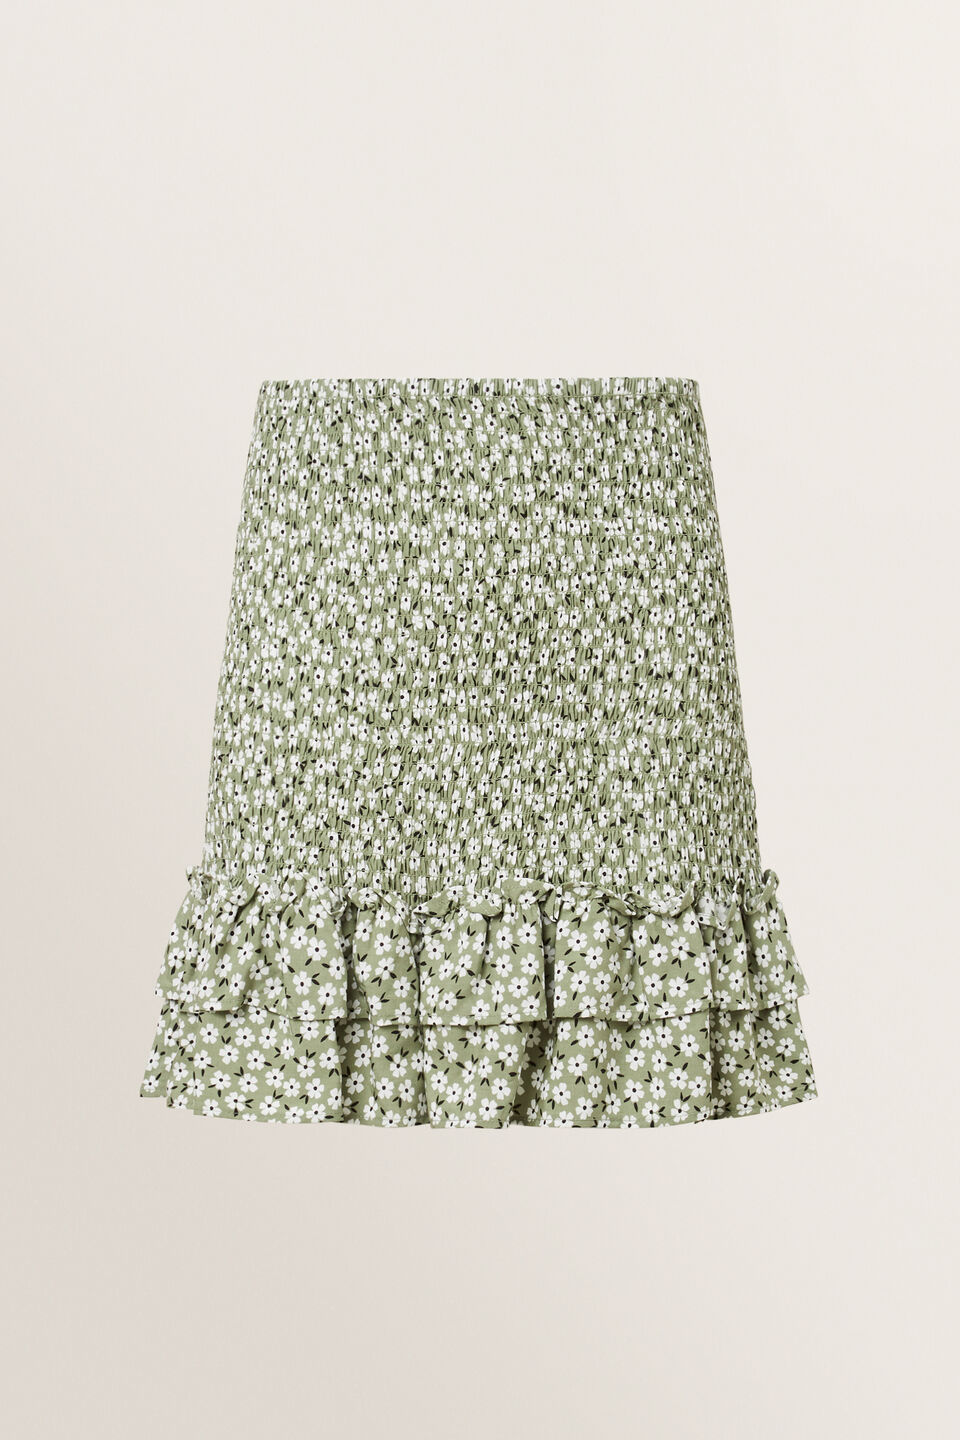 Shirred Skirt  